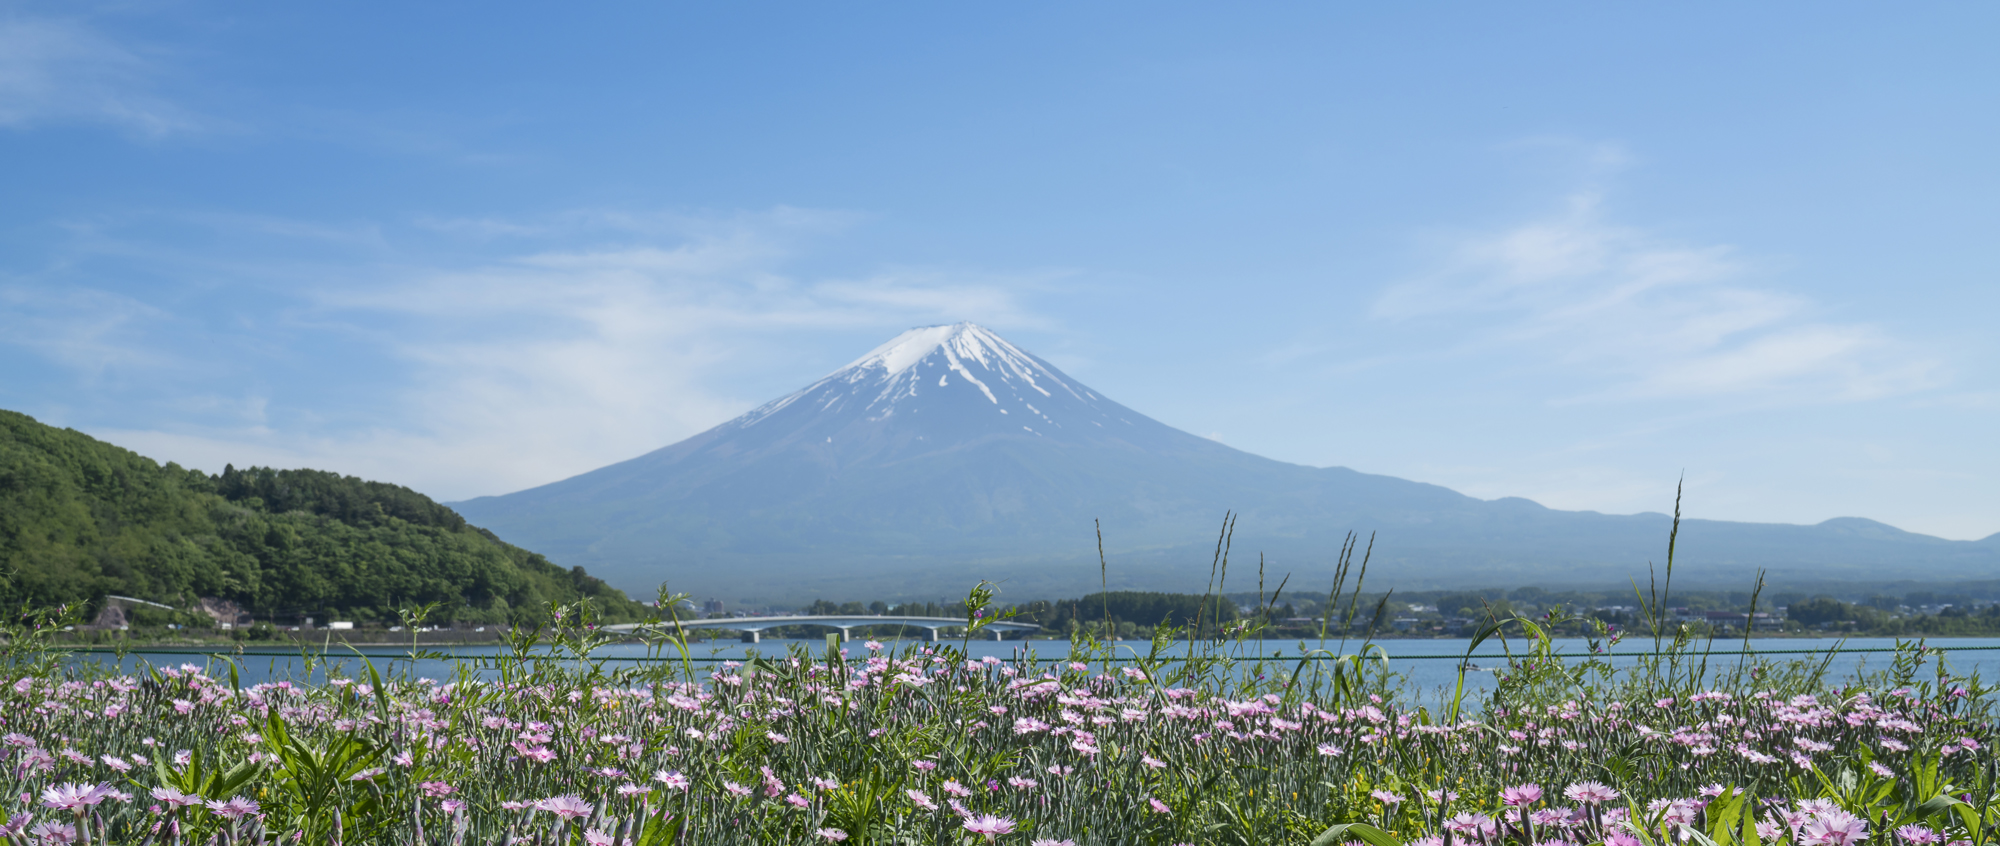 Mt Fuji Daisy 350cm x 147 Lustre_DSC6207.jpg